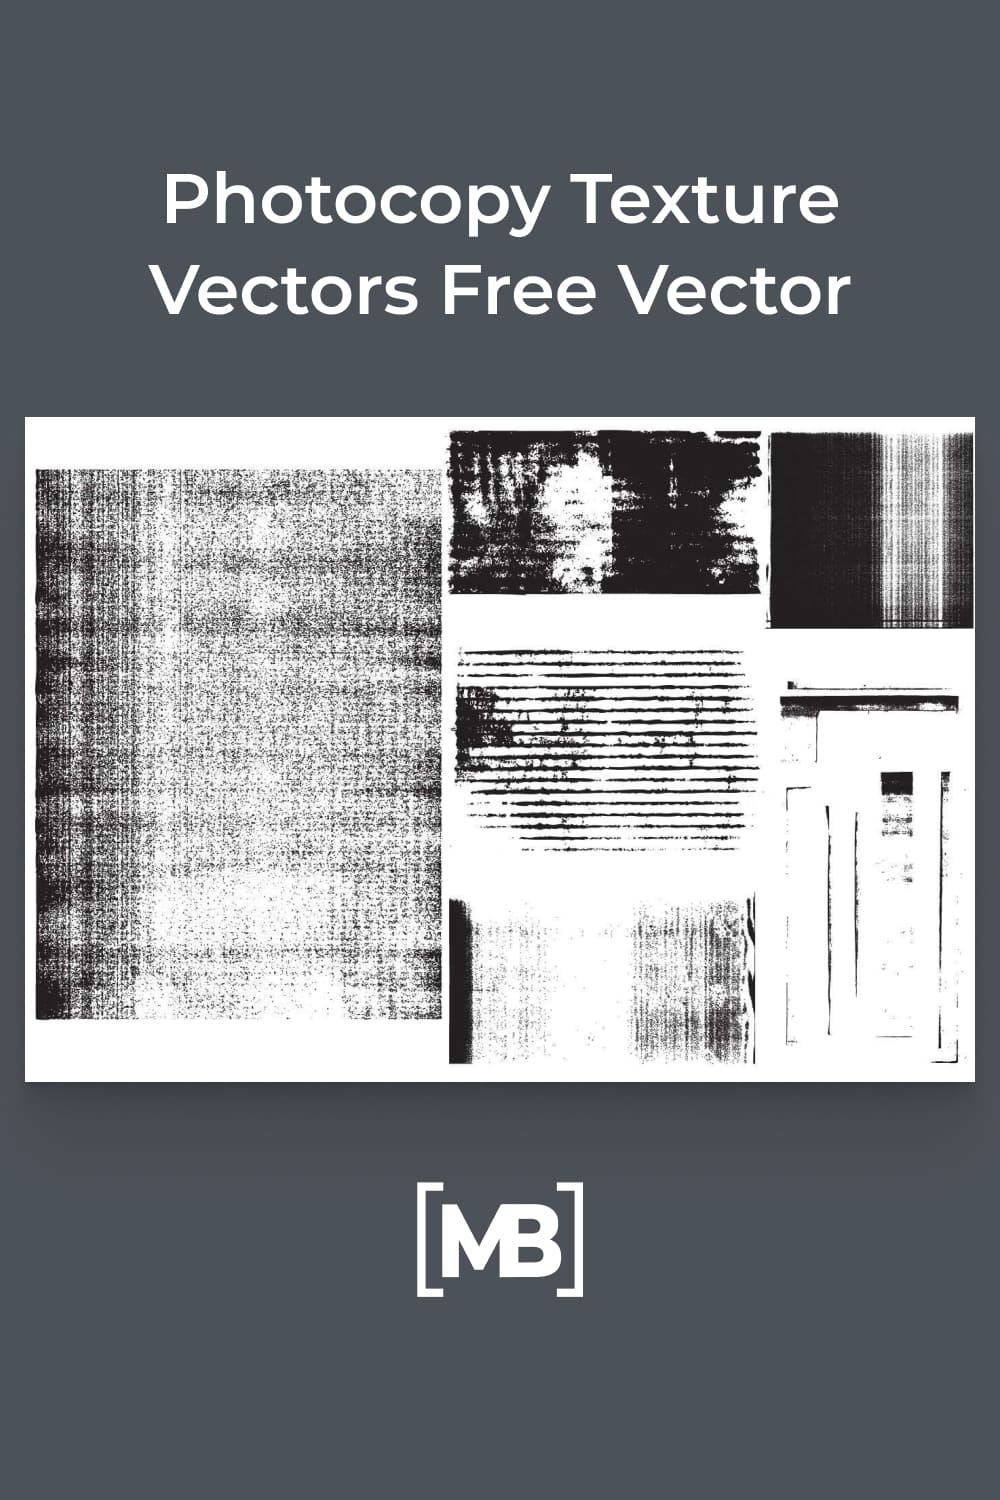 Photocopy texture vectors.